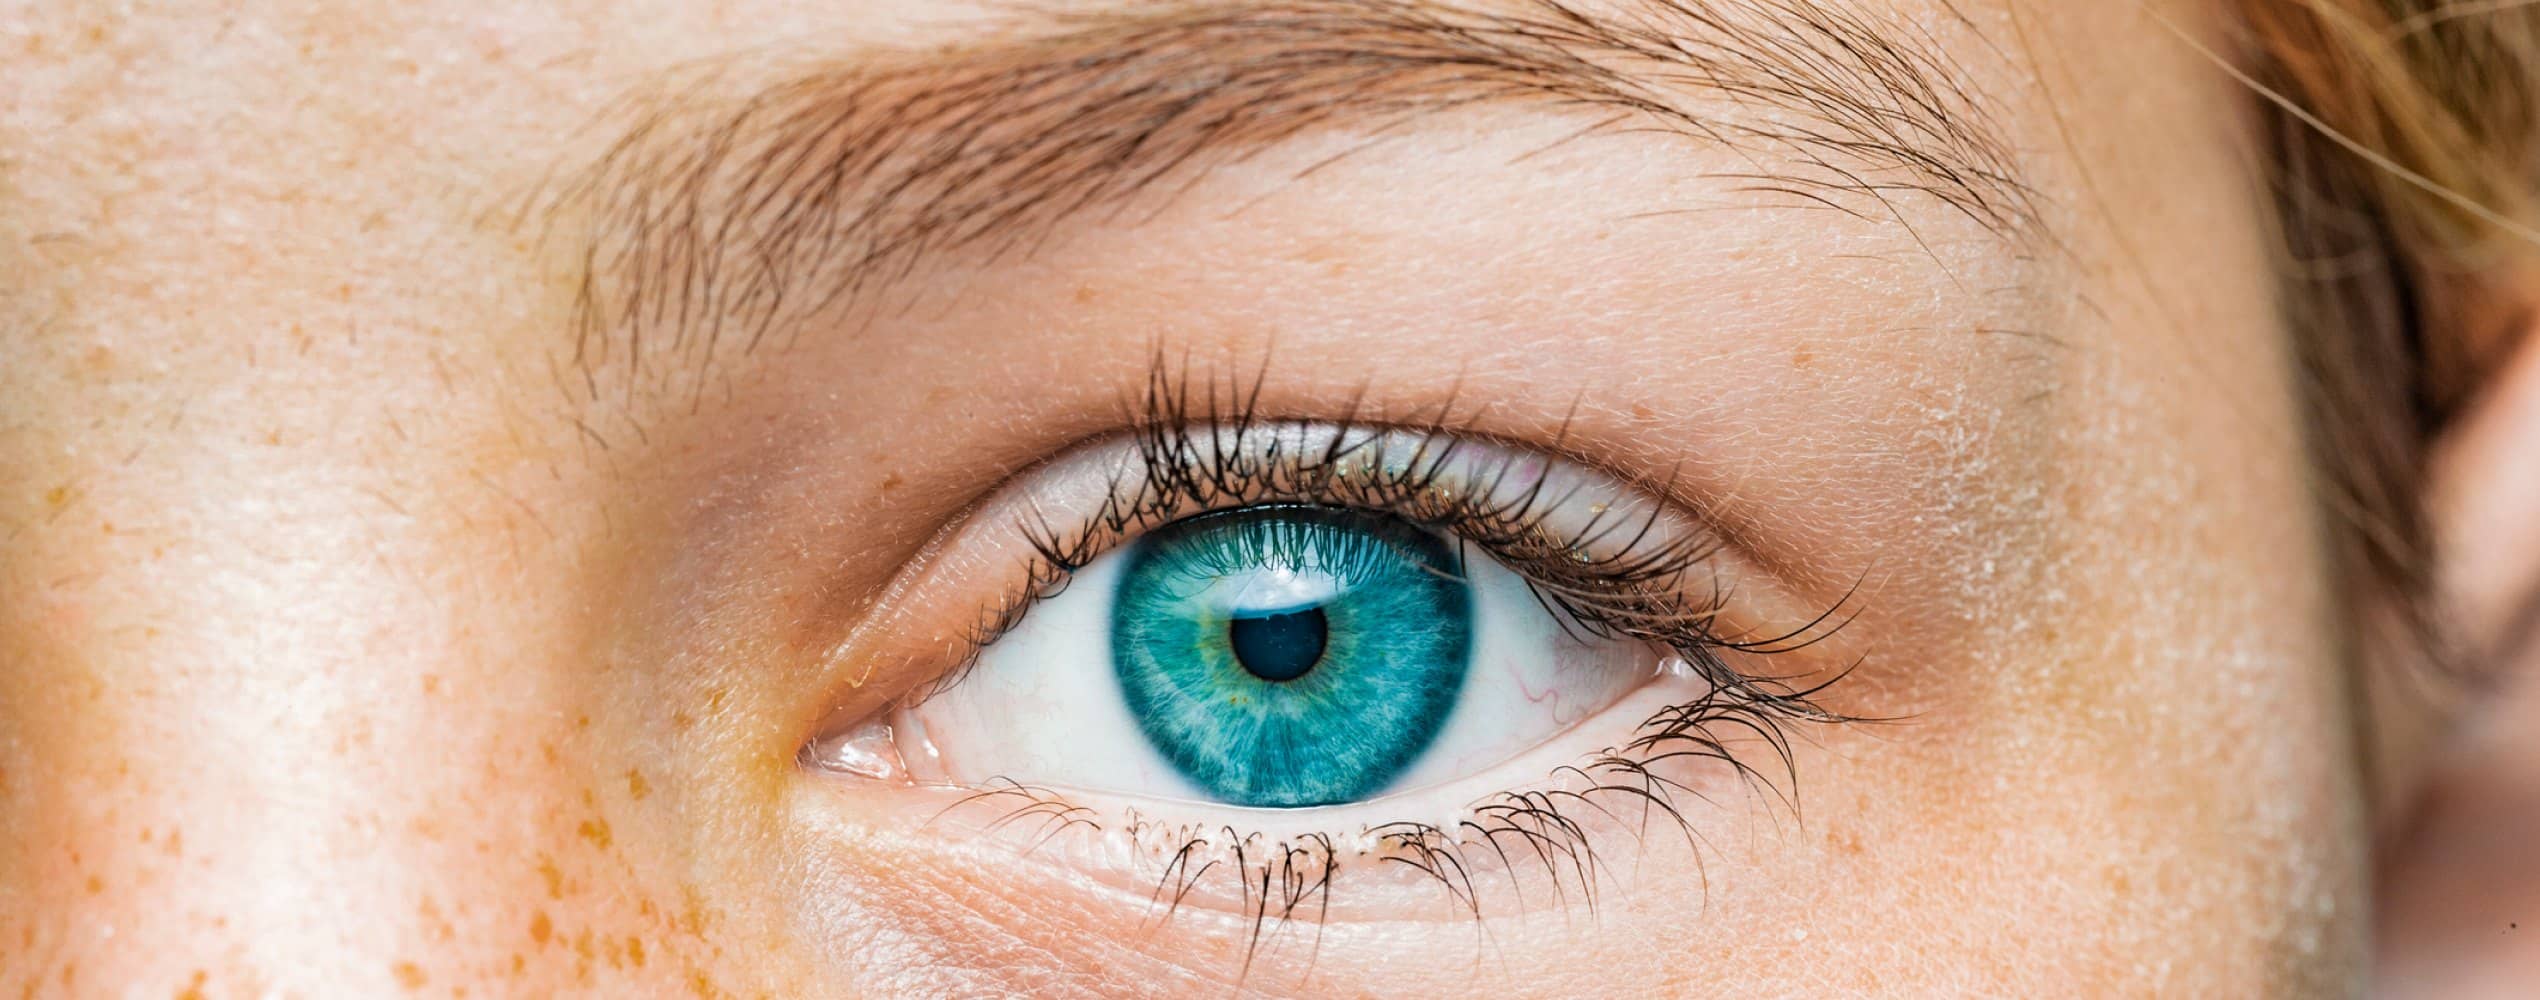 Chirurgie de la cataracte : quel implant choisir ? | Dr Grasswill | Strasbourg